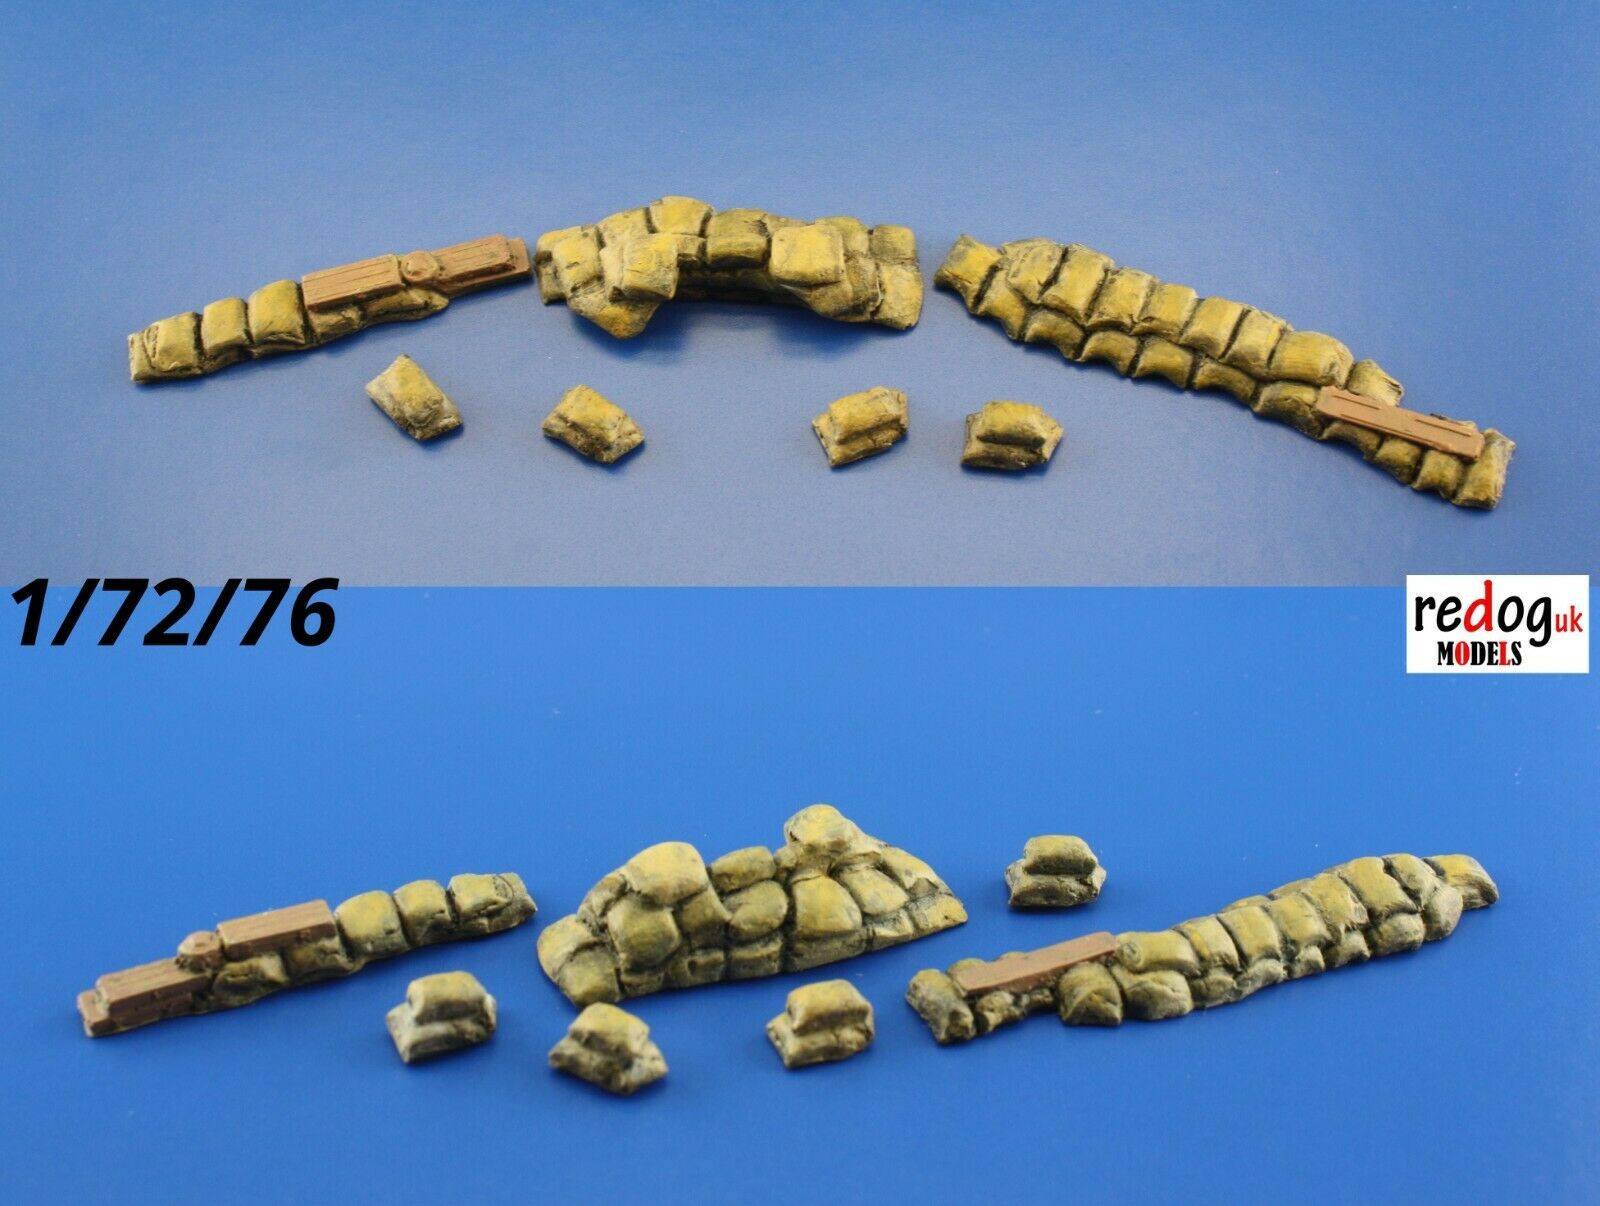 1/72 Military Sandbags Trenches / Resin Diorama Kit Model Building - redoguk